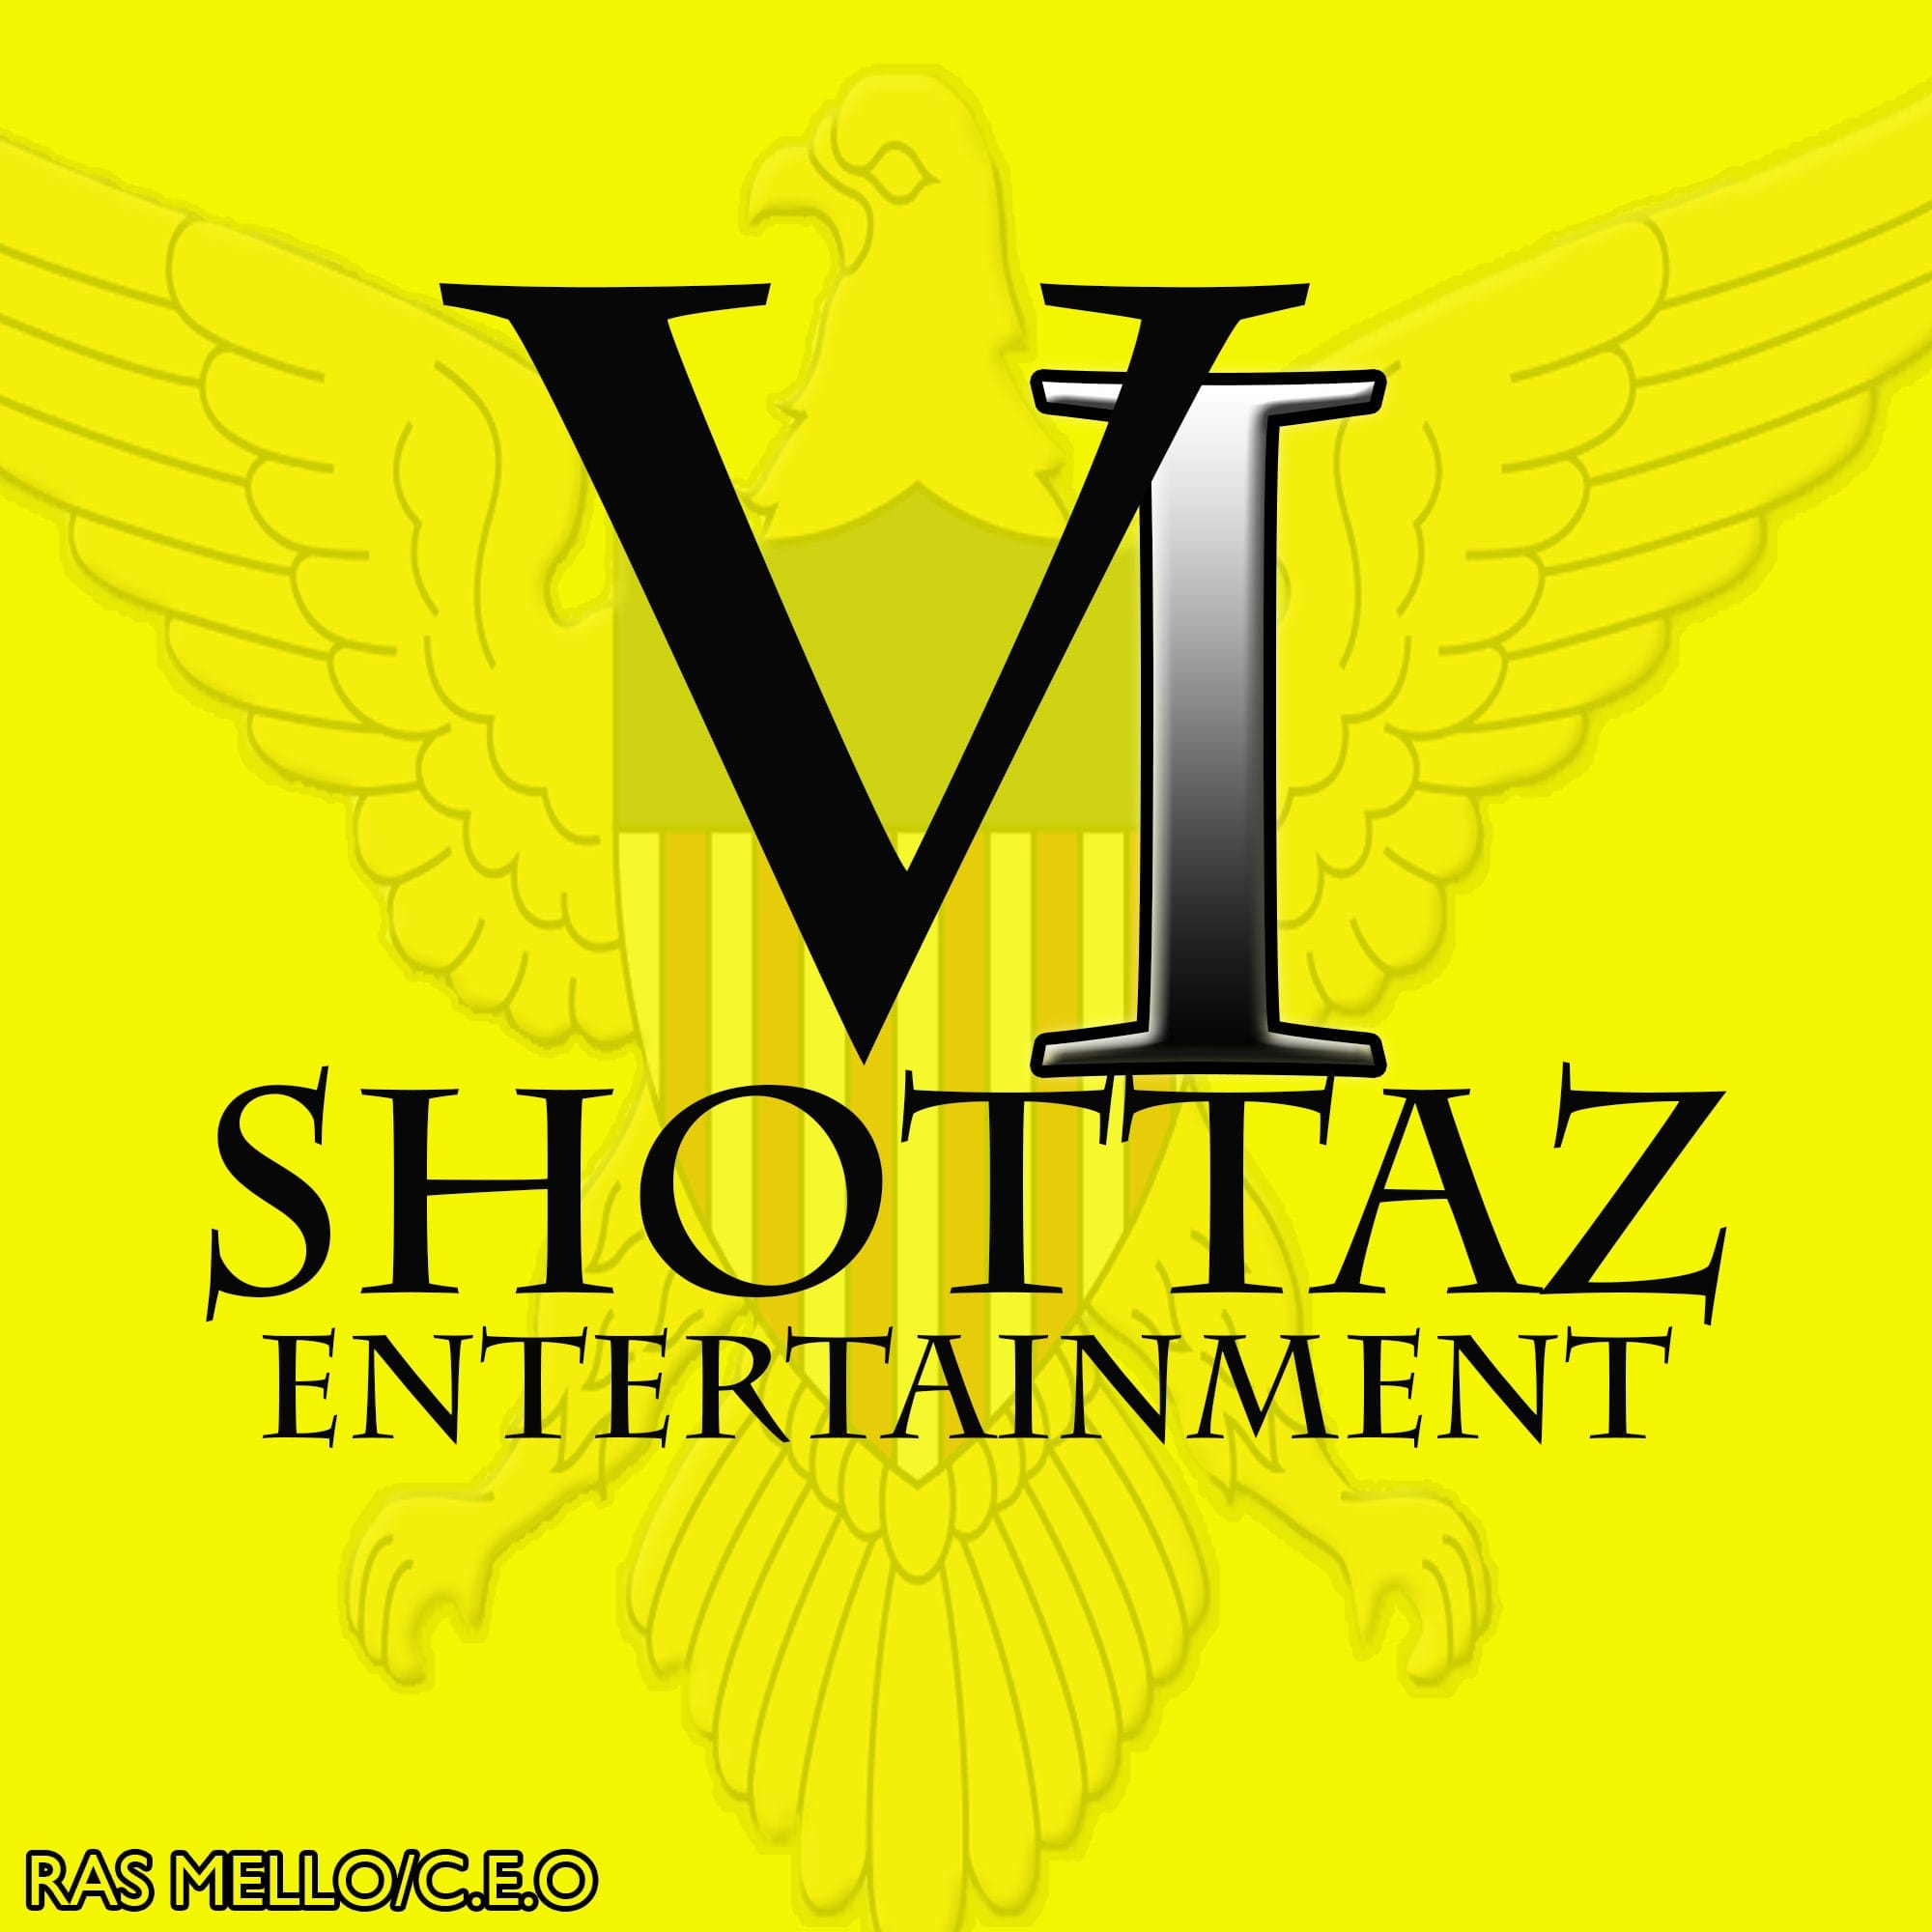 Vi Shottaz Entertainment